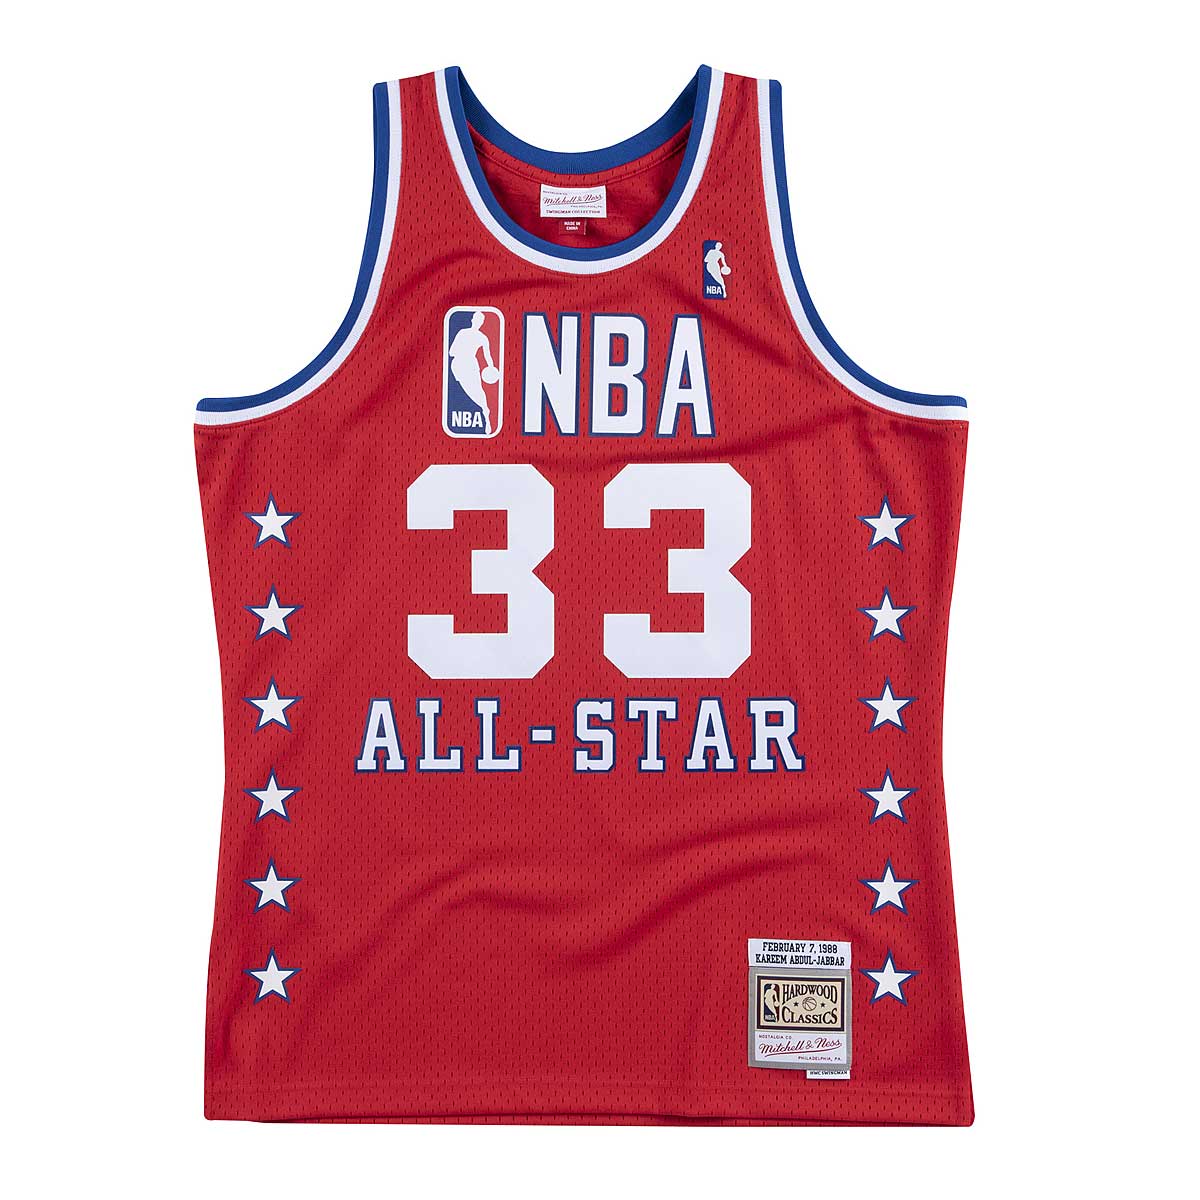 Buy NBA SWINGMAN JERSEY ALL STAR 88 - KAREEM ABDUL-JABBAR for N/A 0.0 |  Kickz-DE-AT-INT